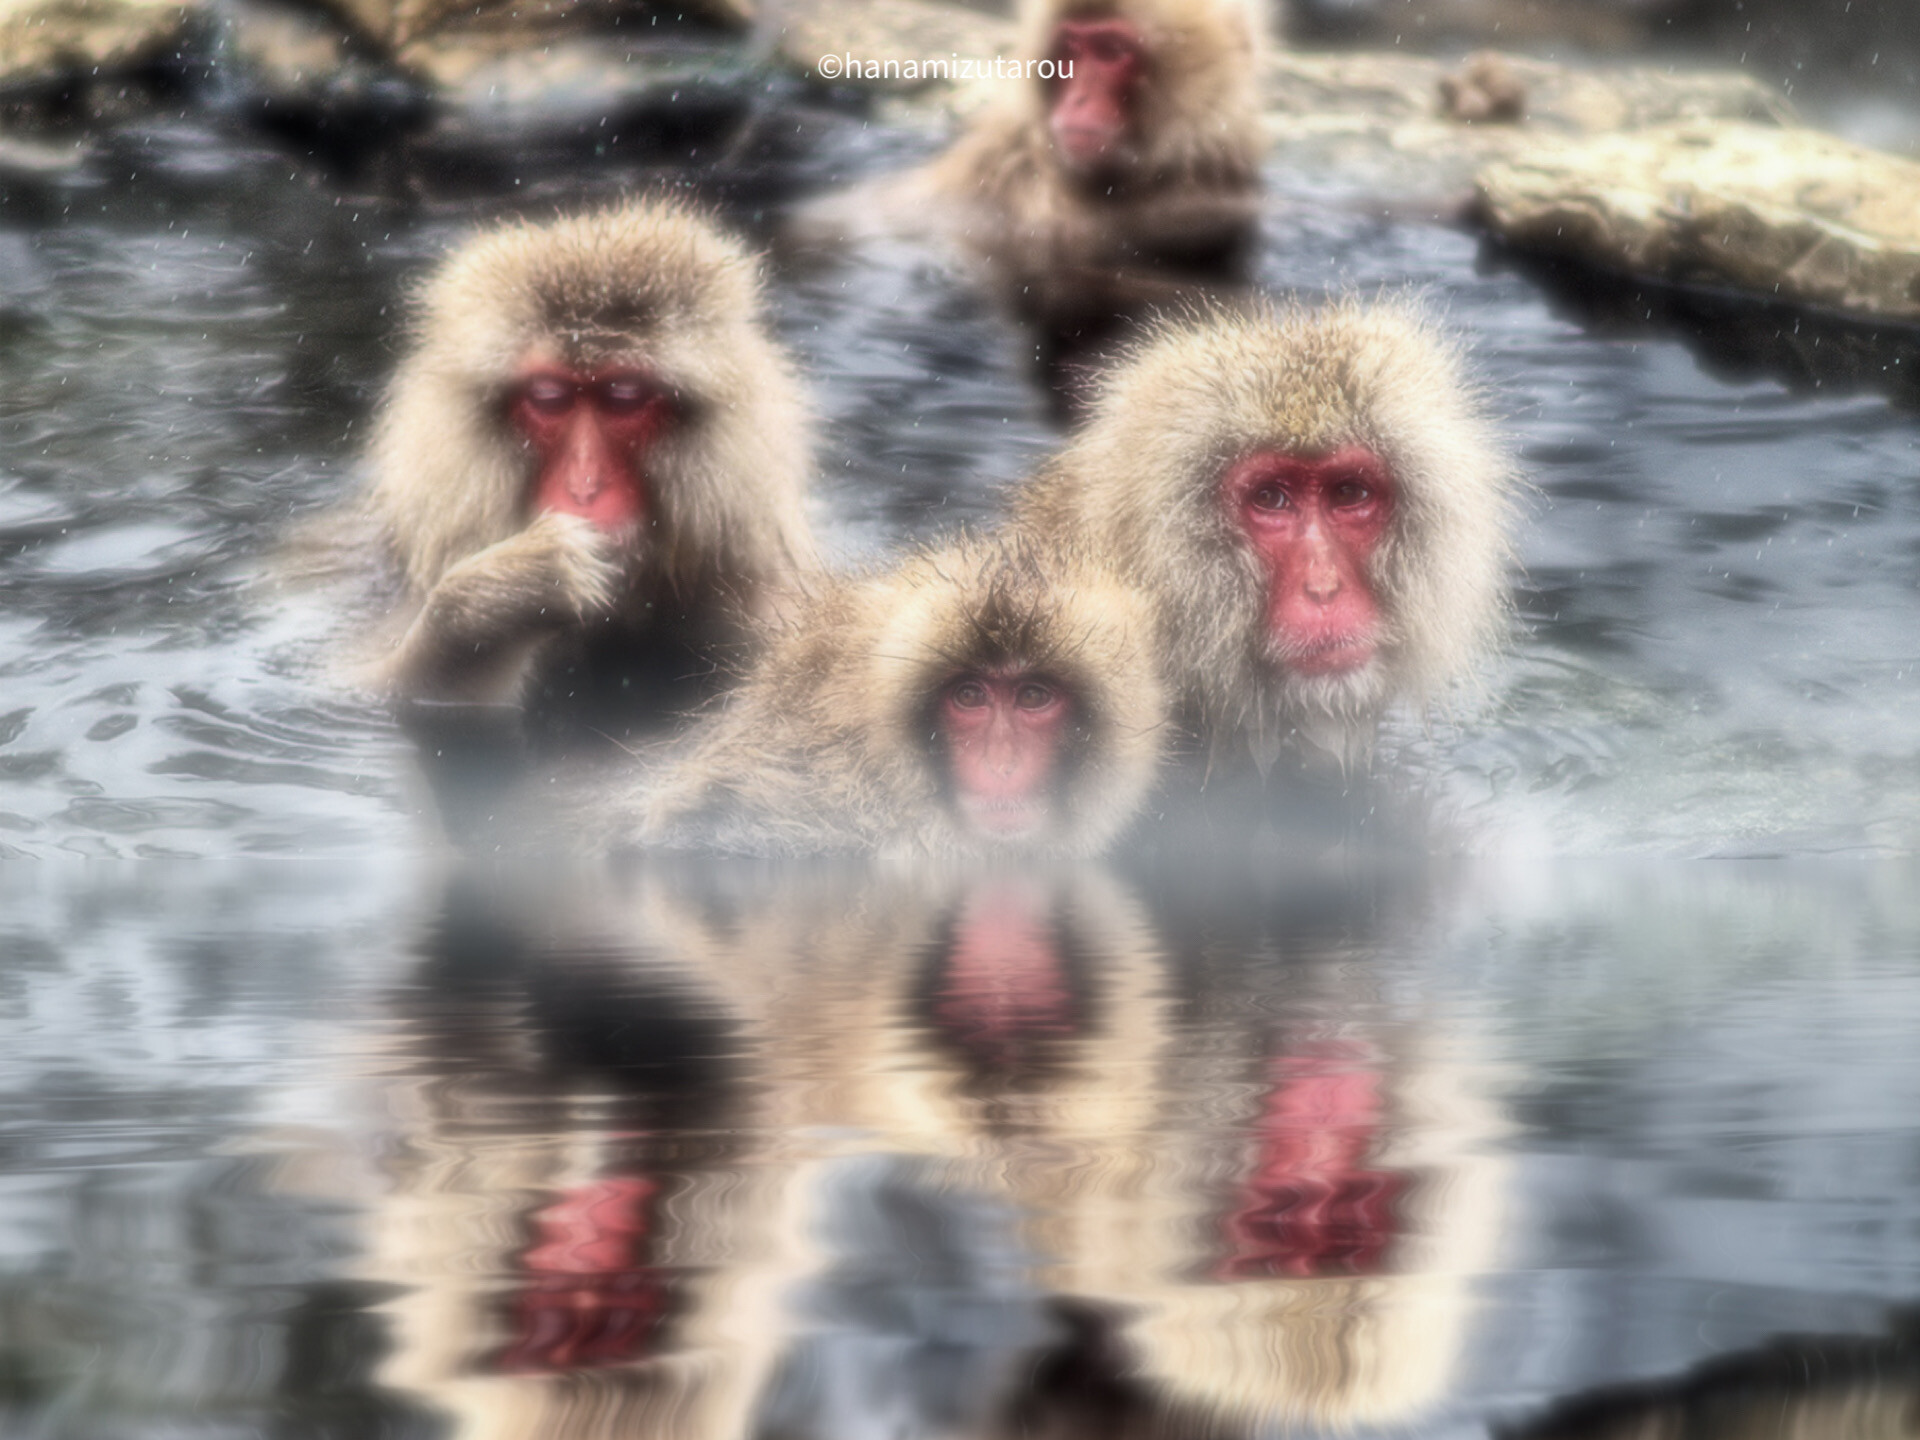 Hot spring Japanese monkey